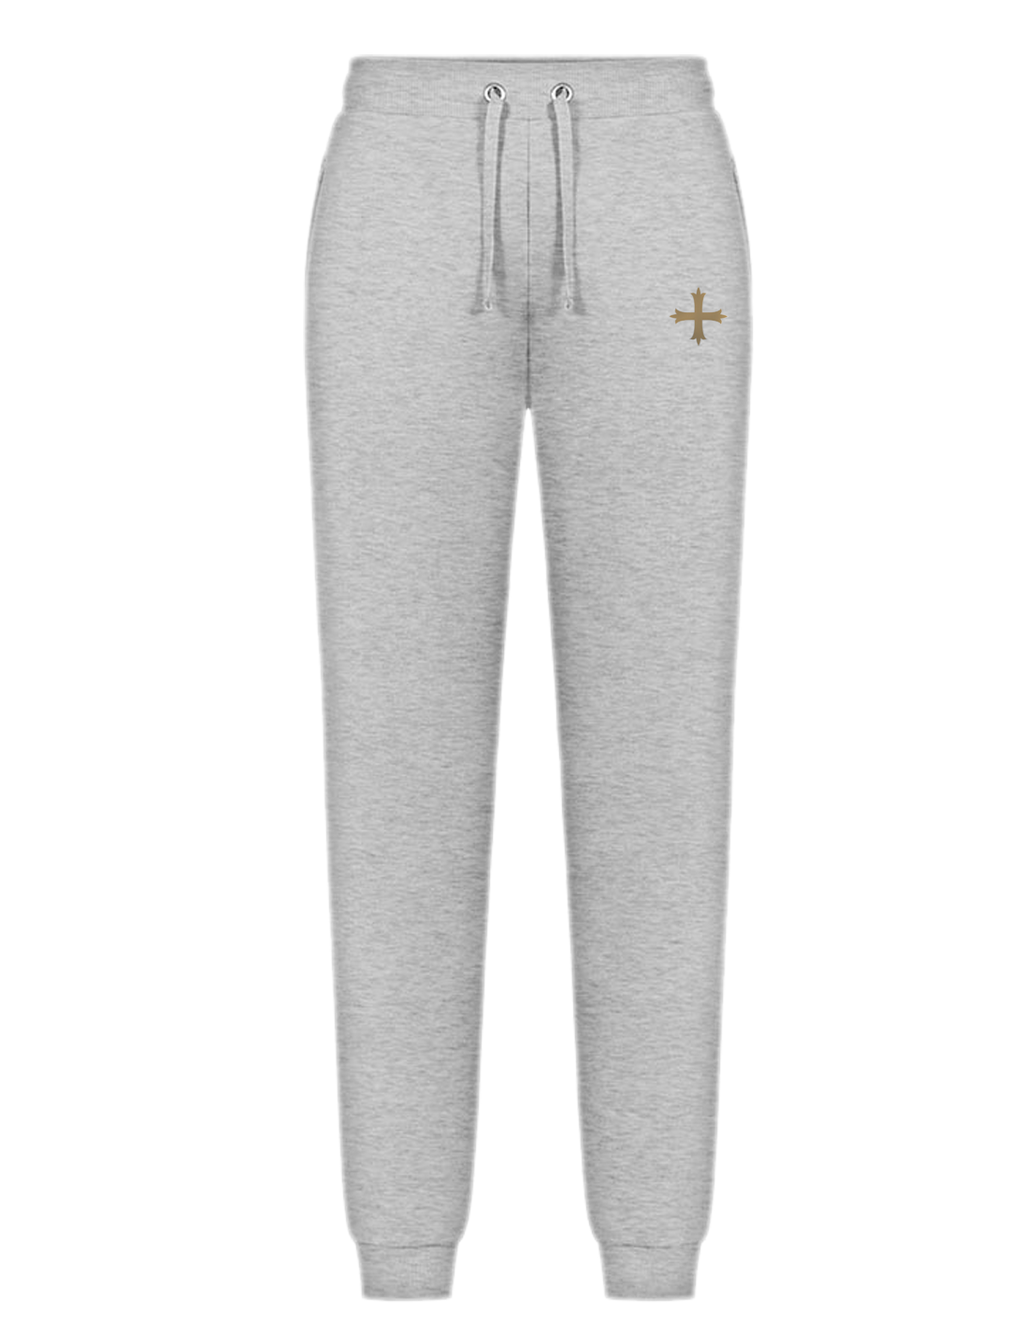 Louis Vuitton Grey sweatpants